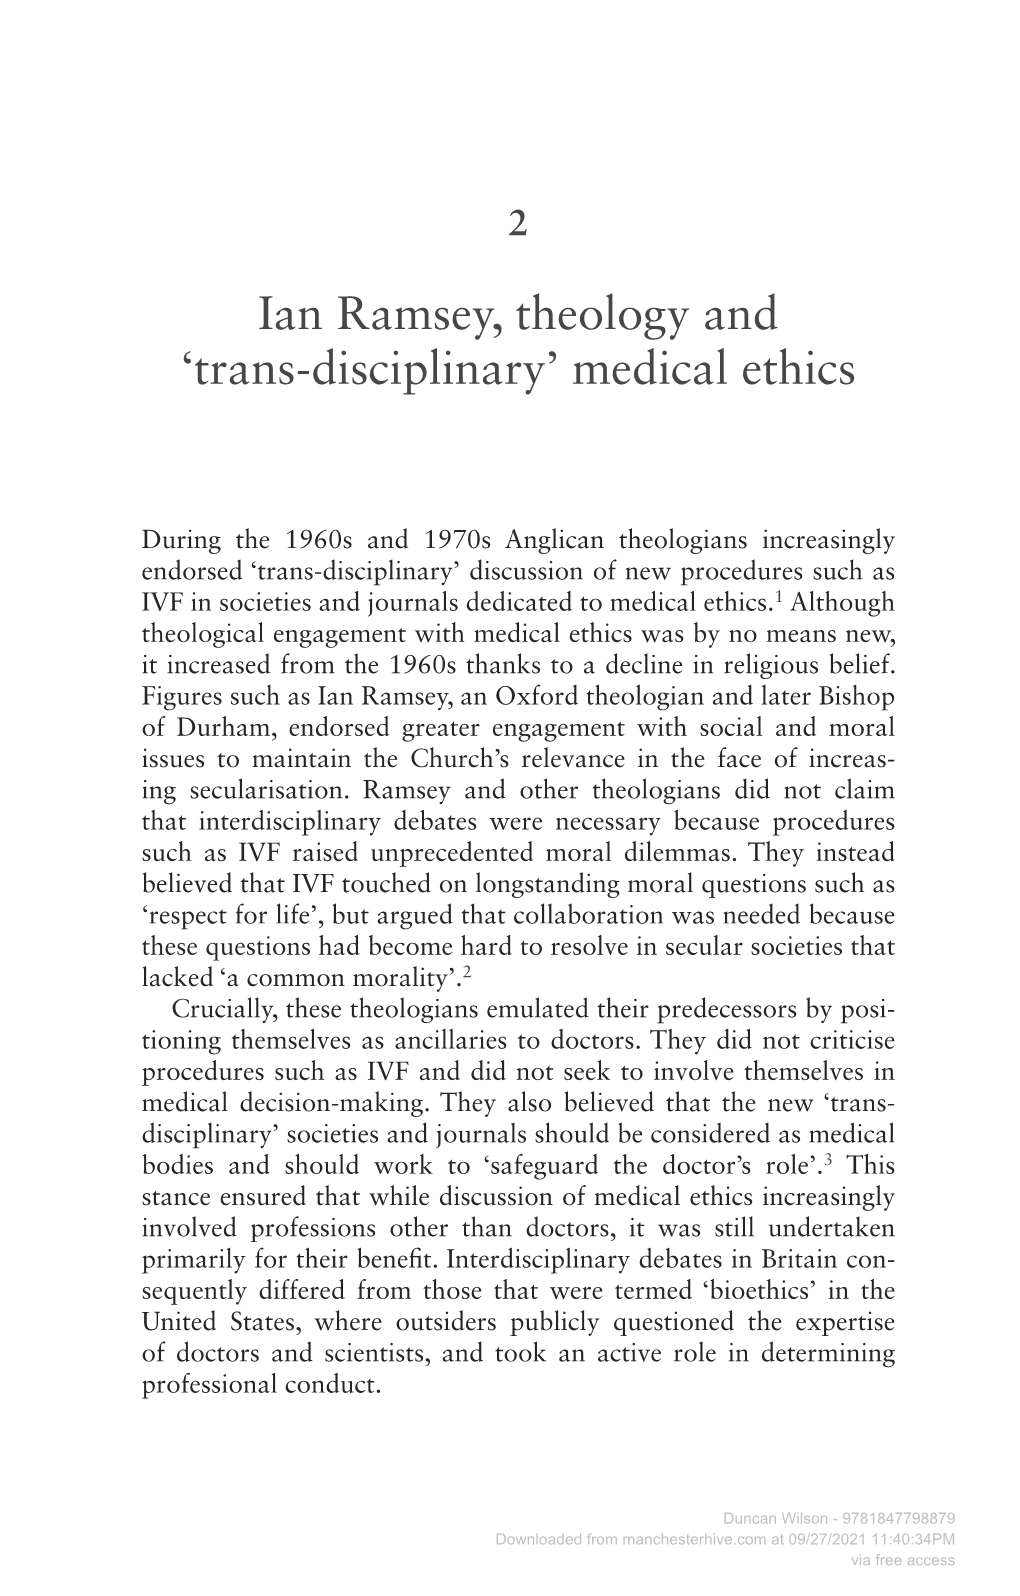 Ian Ramsey, Theology and ‘Trans-Disciplinary’ Medical Ethics